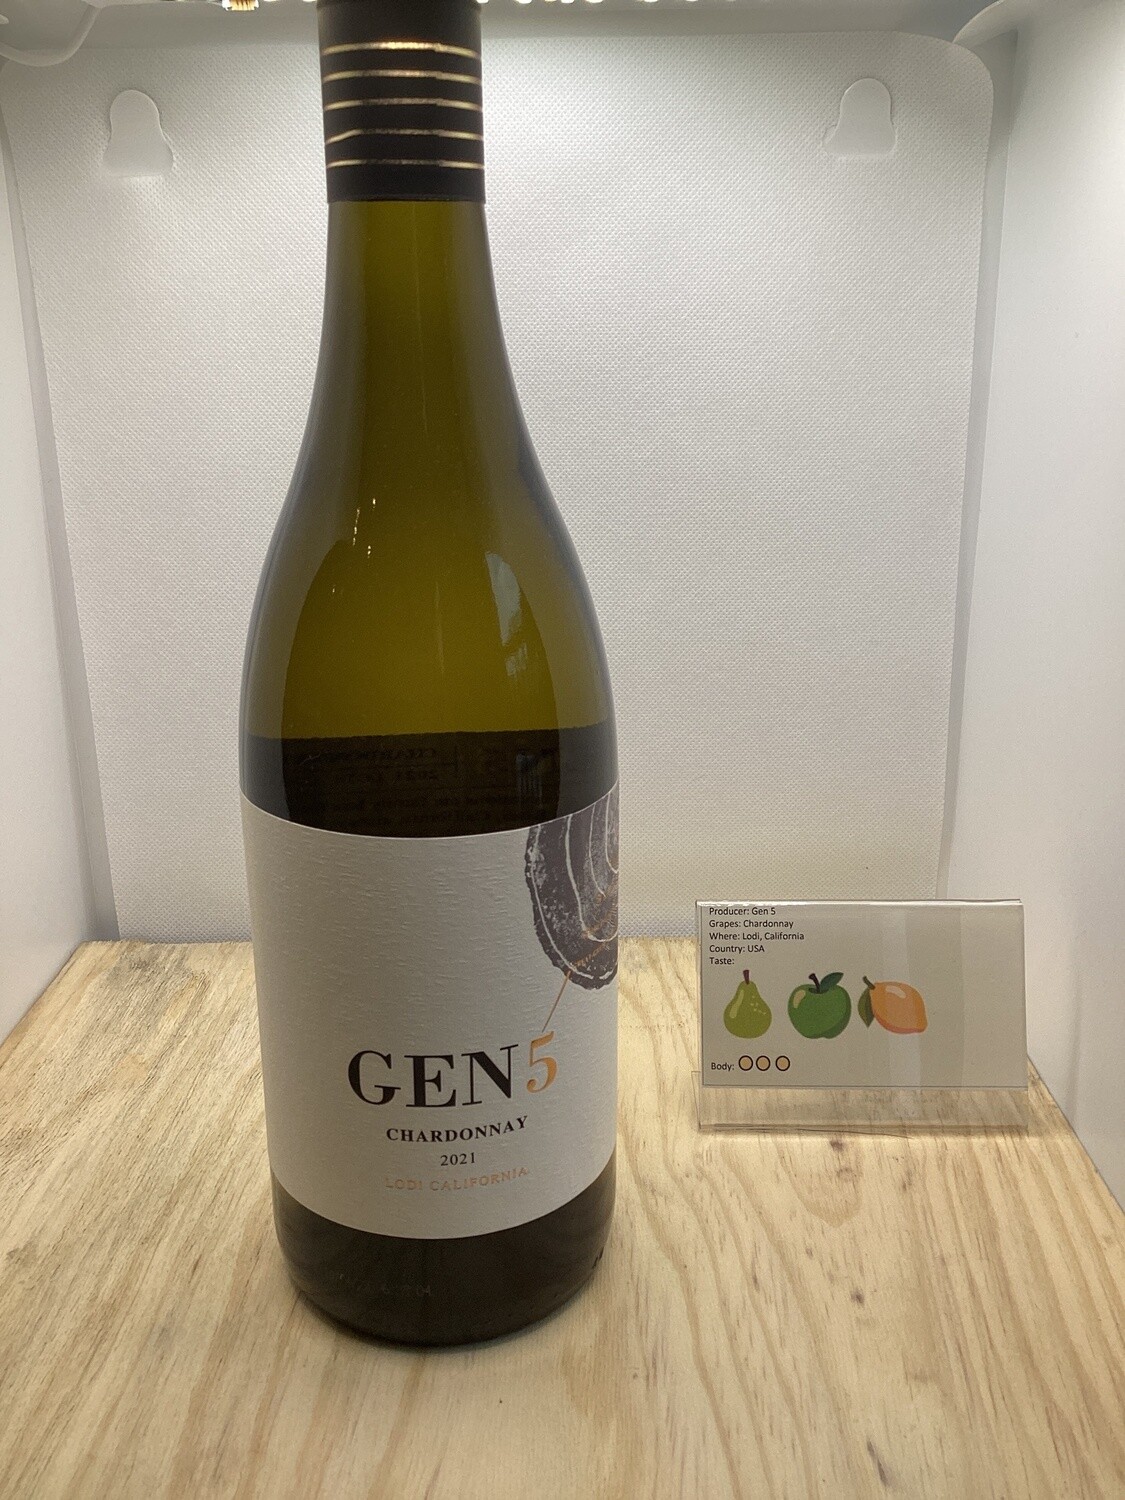 Gen 5 Chardonnay from Lodi,  California 2021 (750ml)